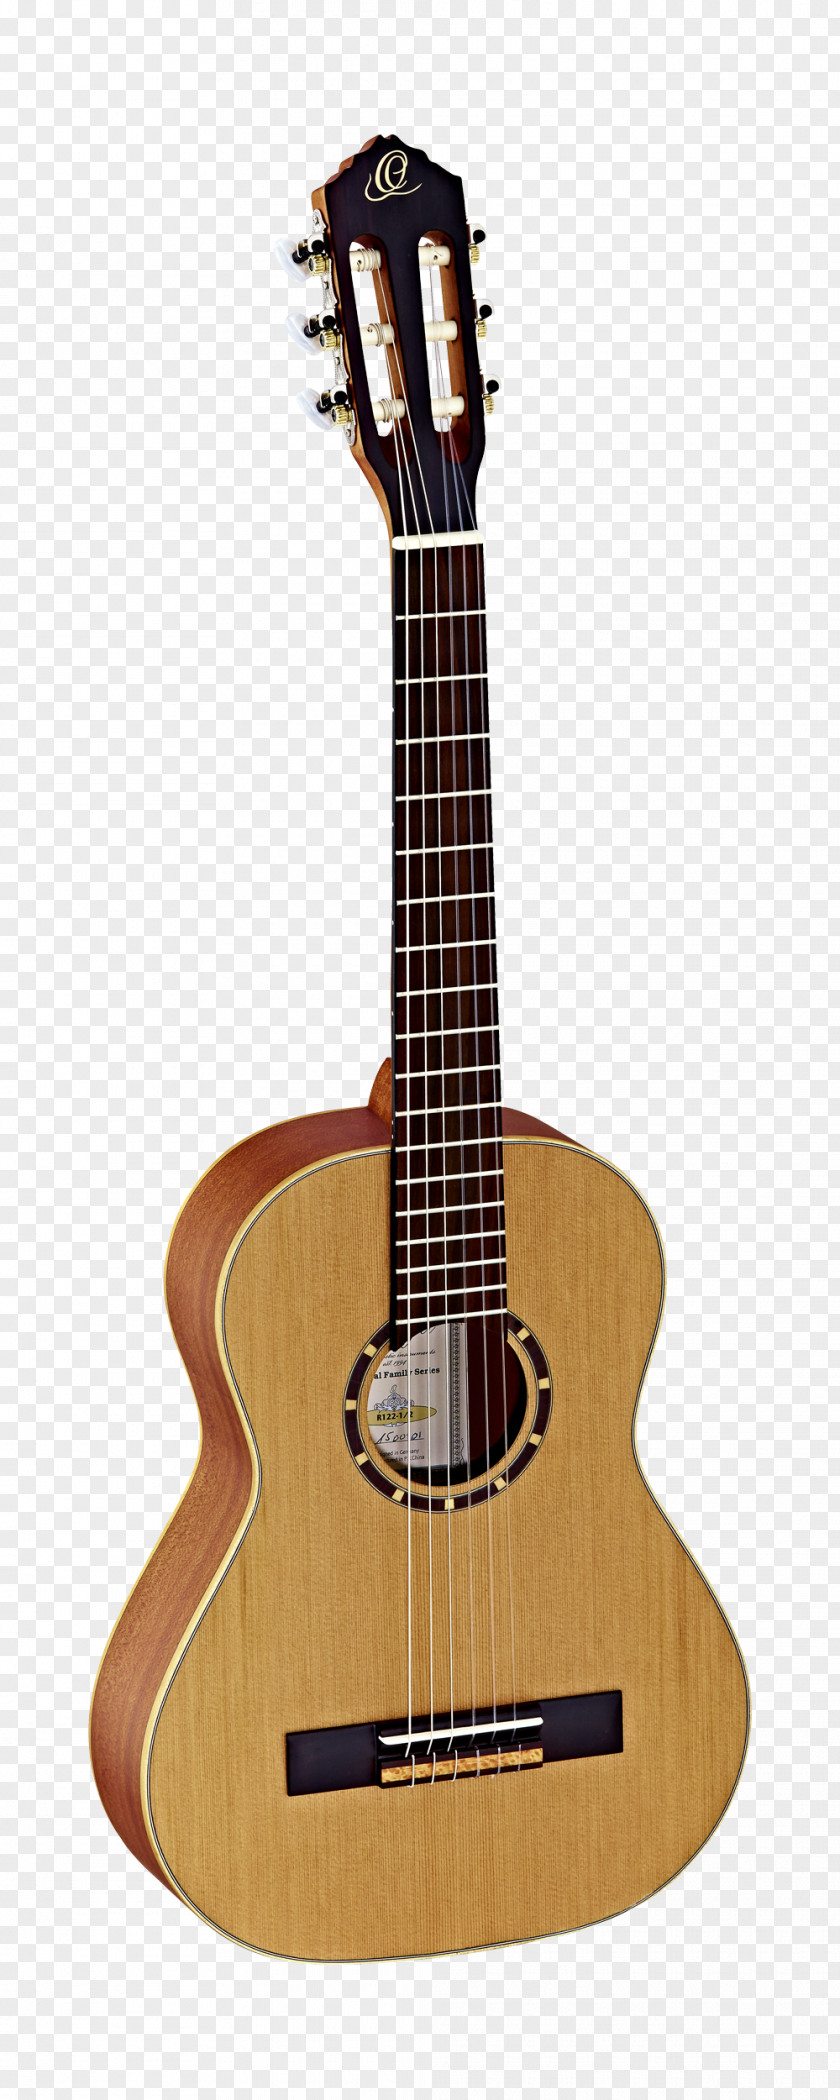 Amancio Ortega Classical Guitar Gig Bag Musical Instruments Acoustic PNG